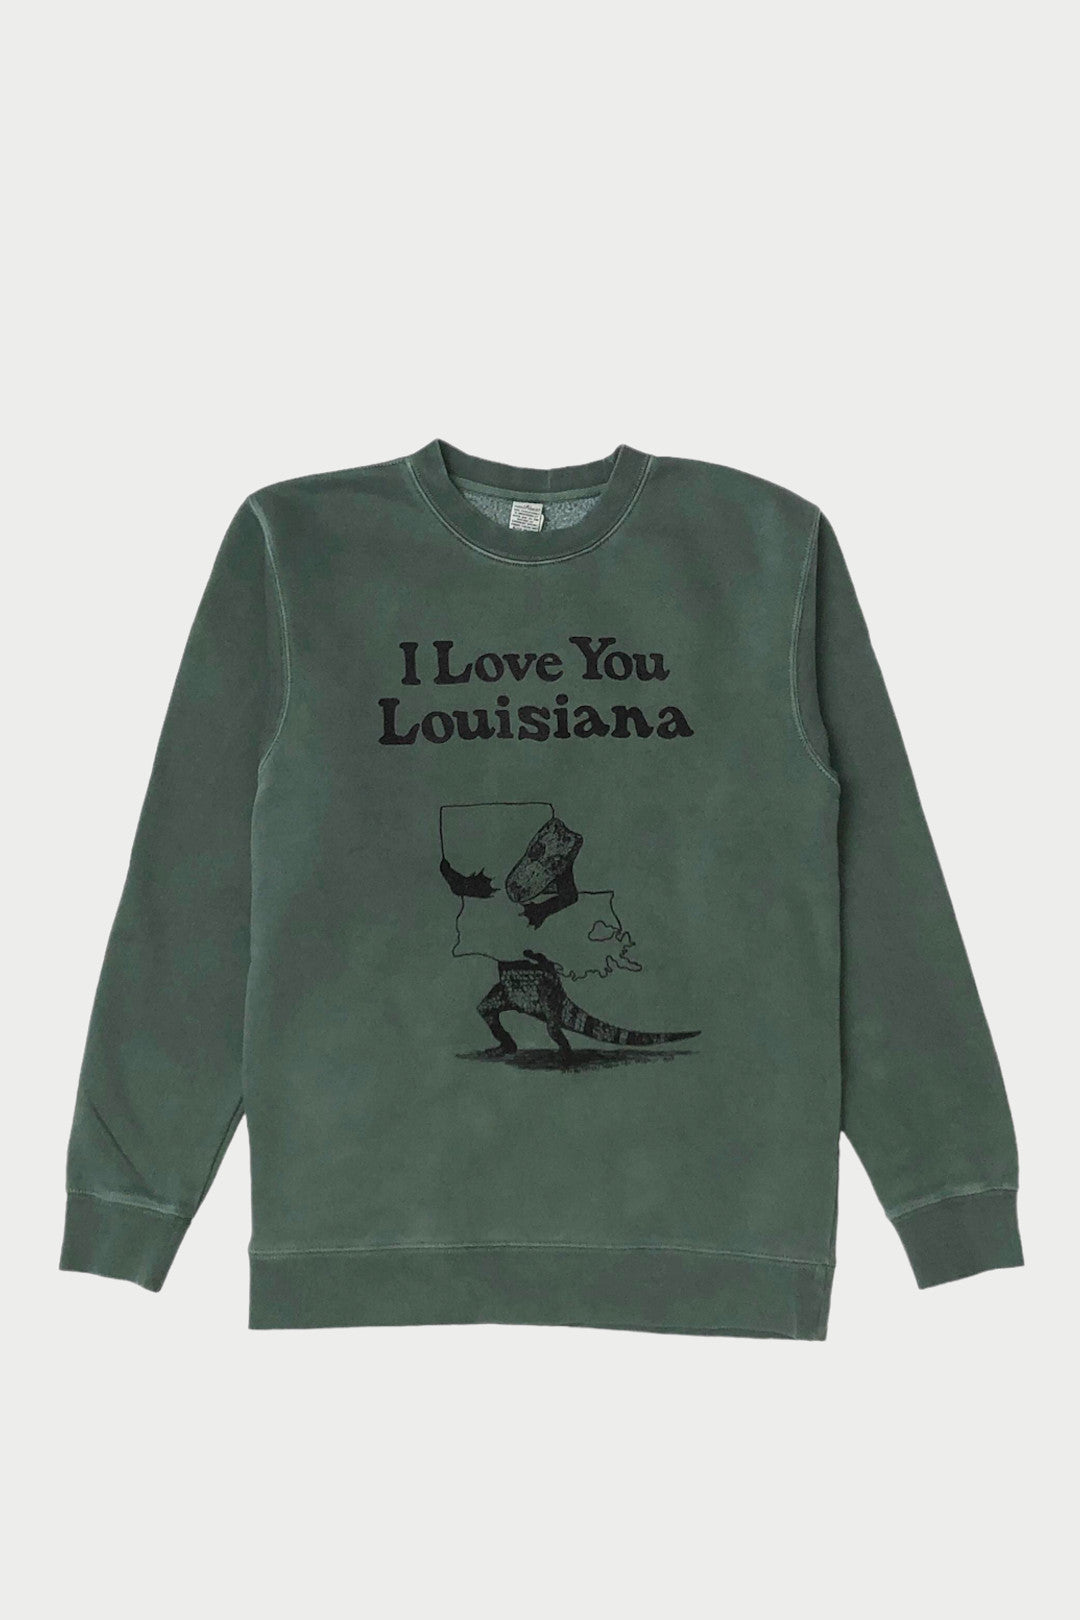 I Love You Louisiana Sweatshirt